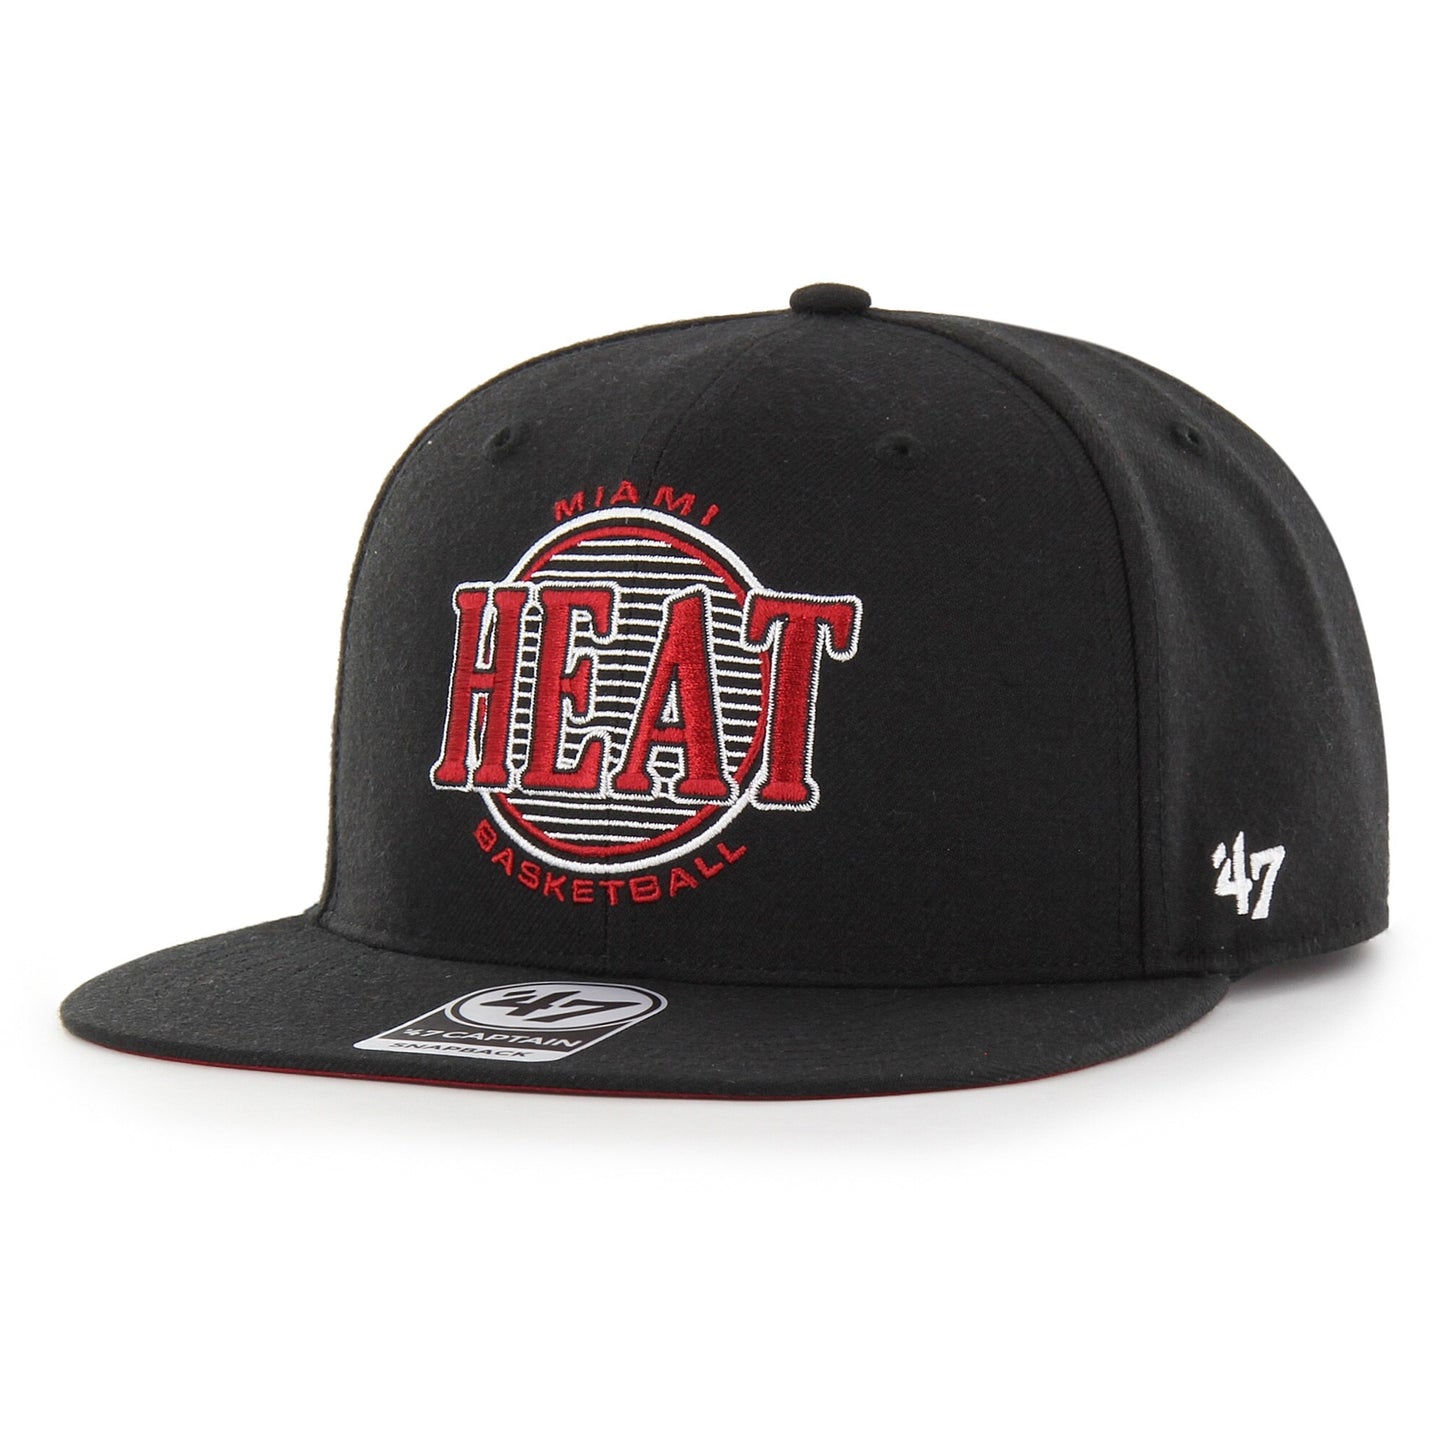 Miami Heat '47 High Post Captain Snapback Hat - Black